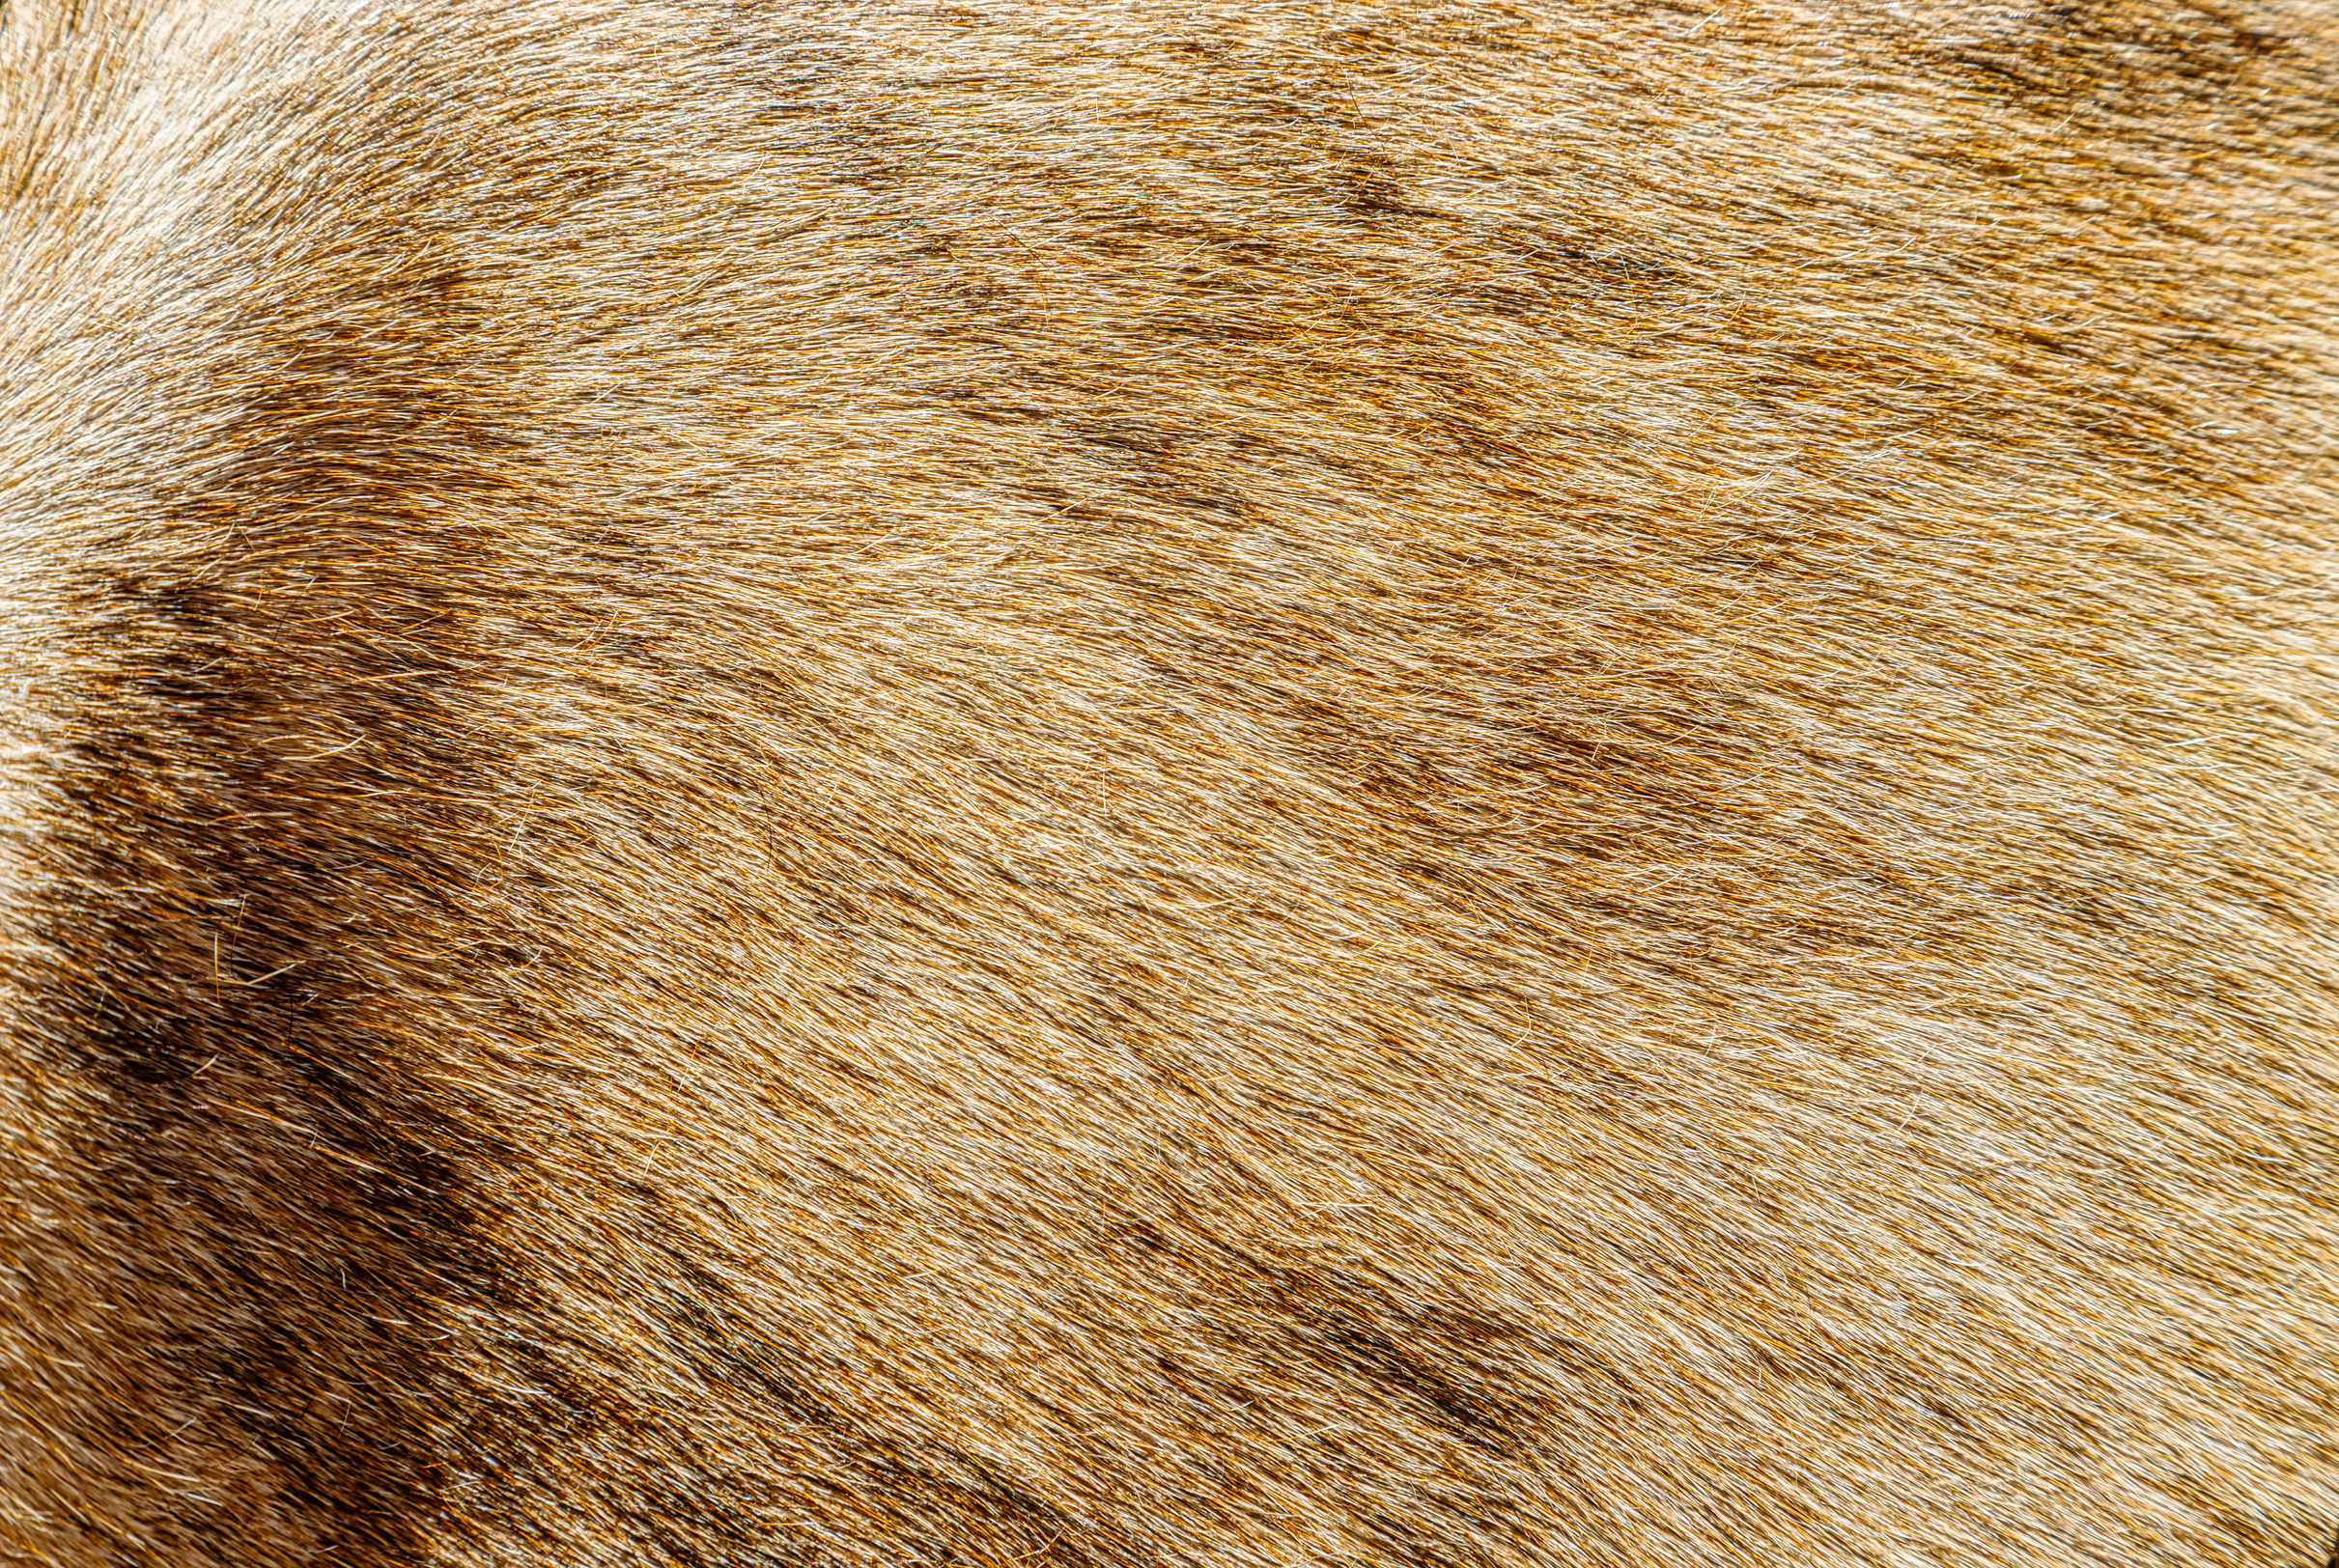 Macro closeup of cow skin with natural light